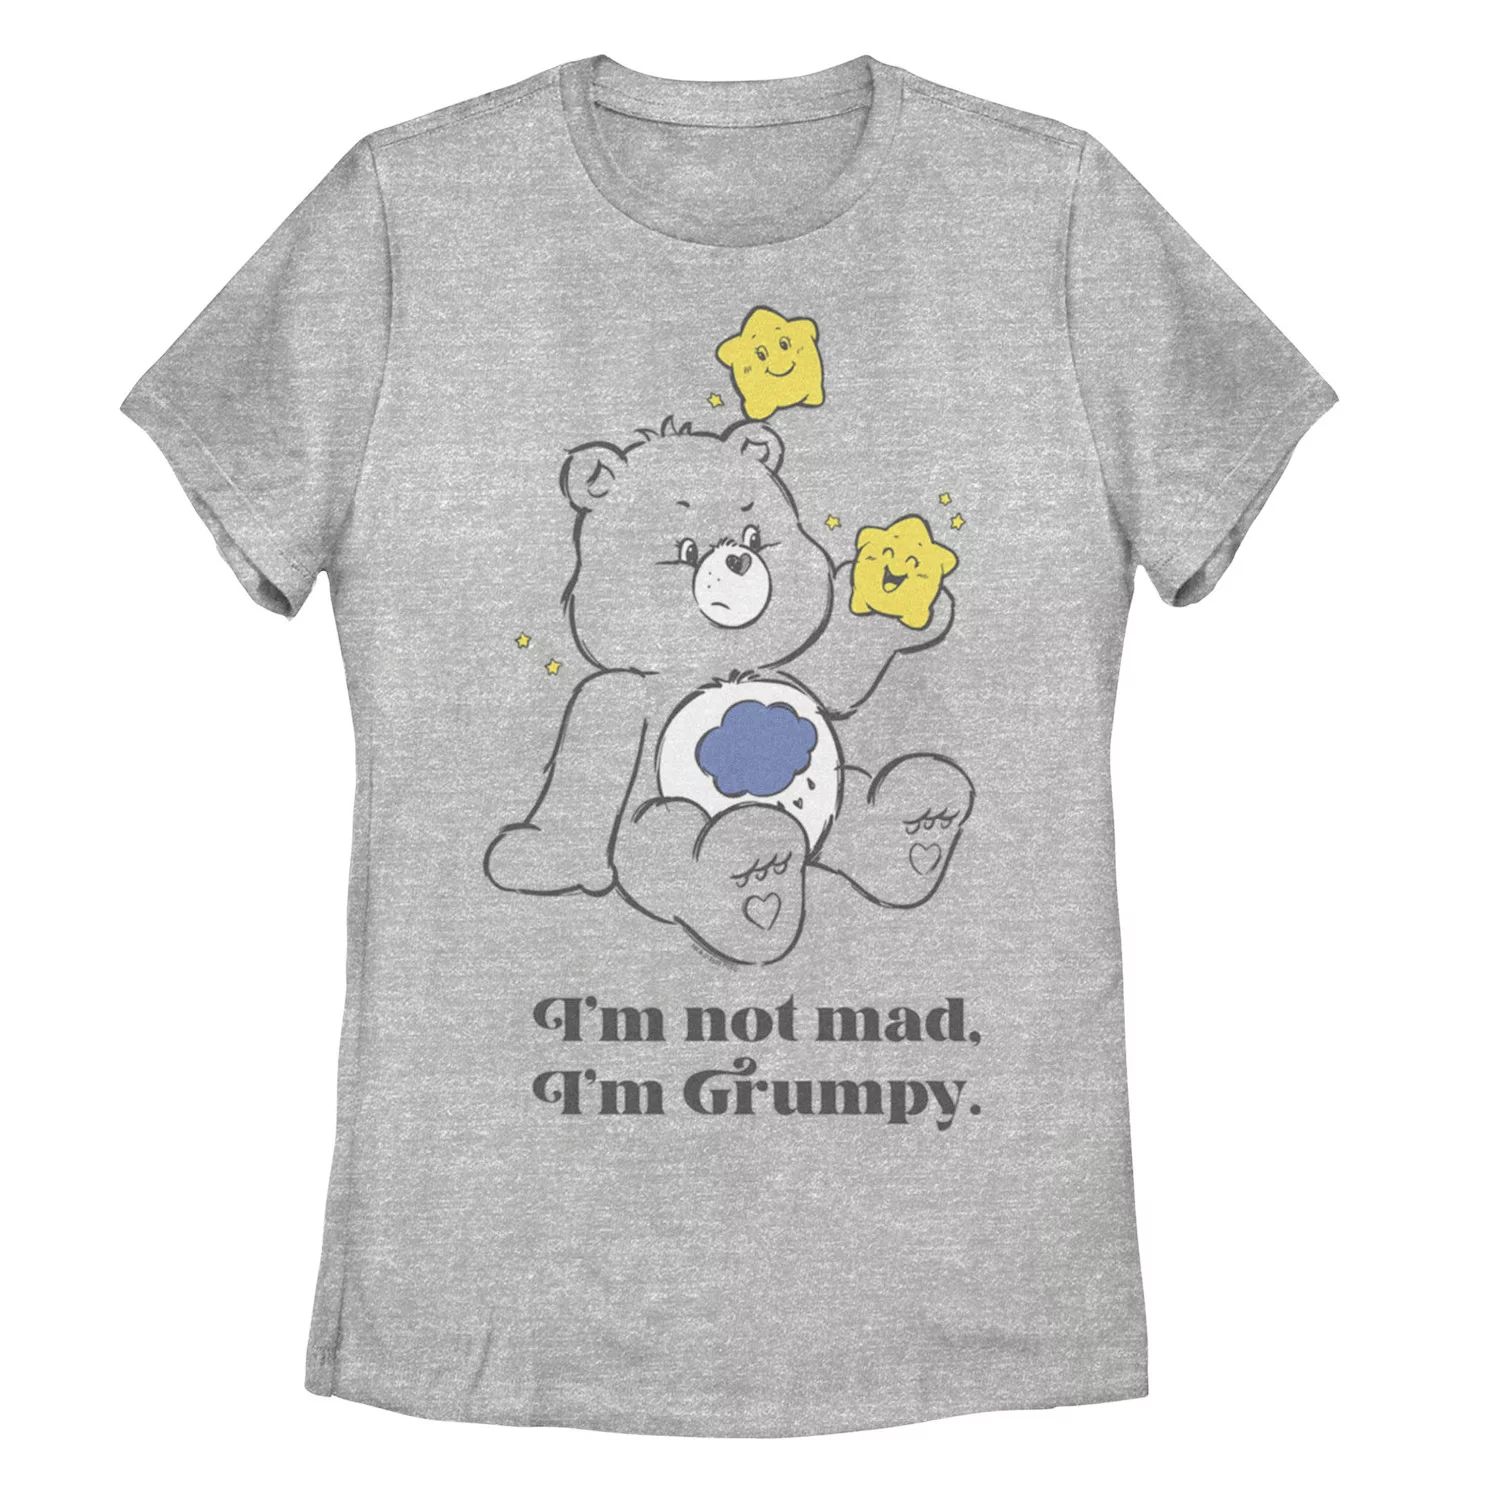 Футболка с рисунком «I’m Grumpy» для юниоров Care Bears Grumpy Bear Licensed Character